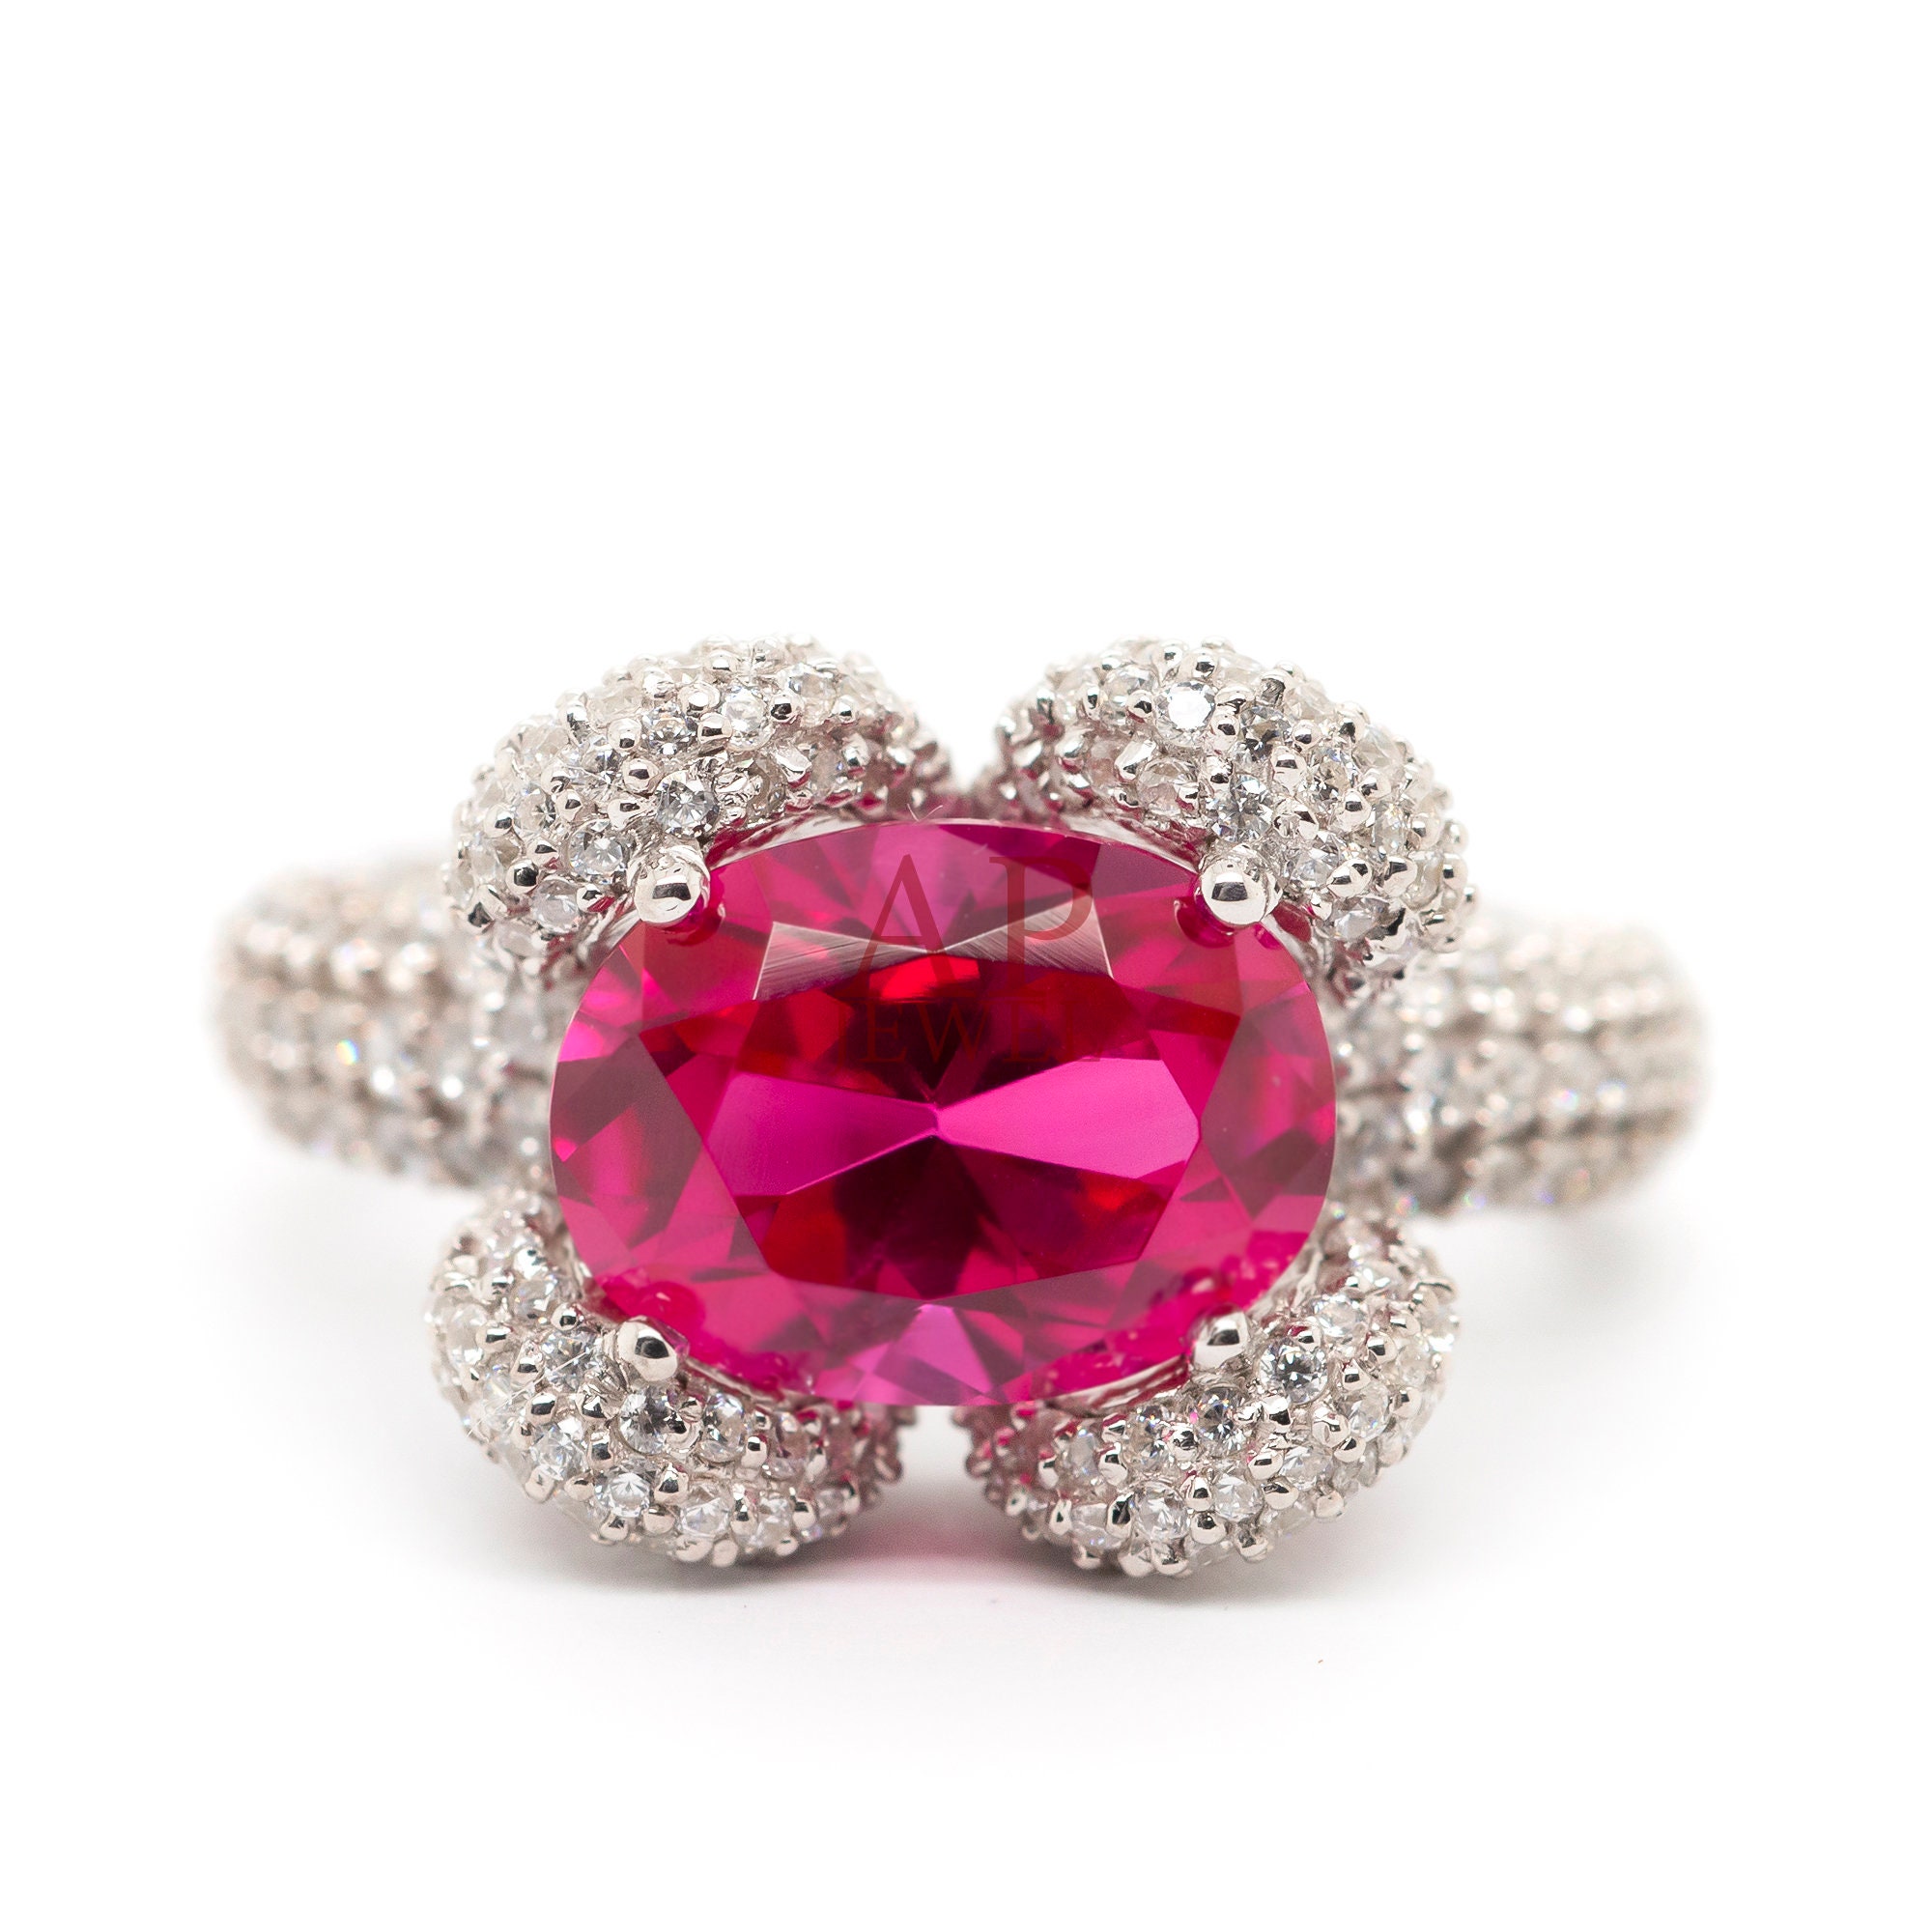 12.00 X 10.00 MM Oval Cut CZ Pink Diamond Wedding Ring | Etsy